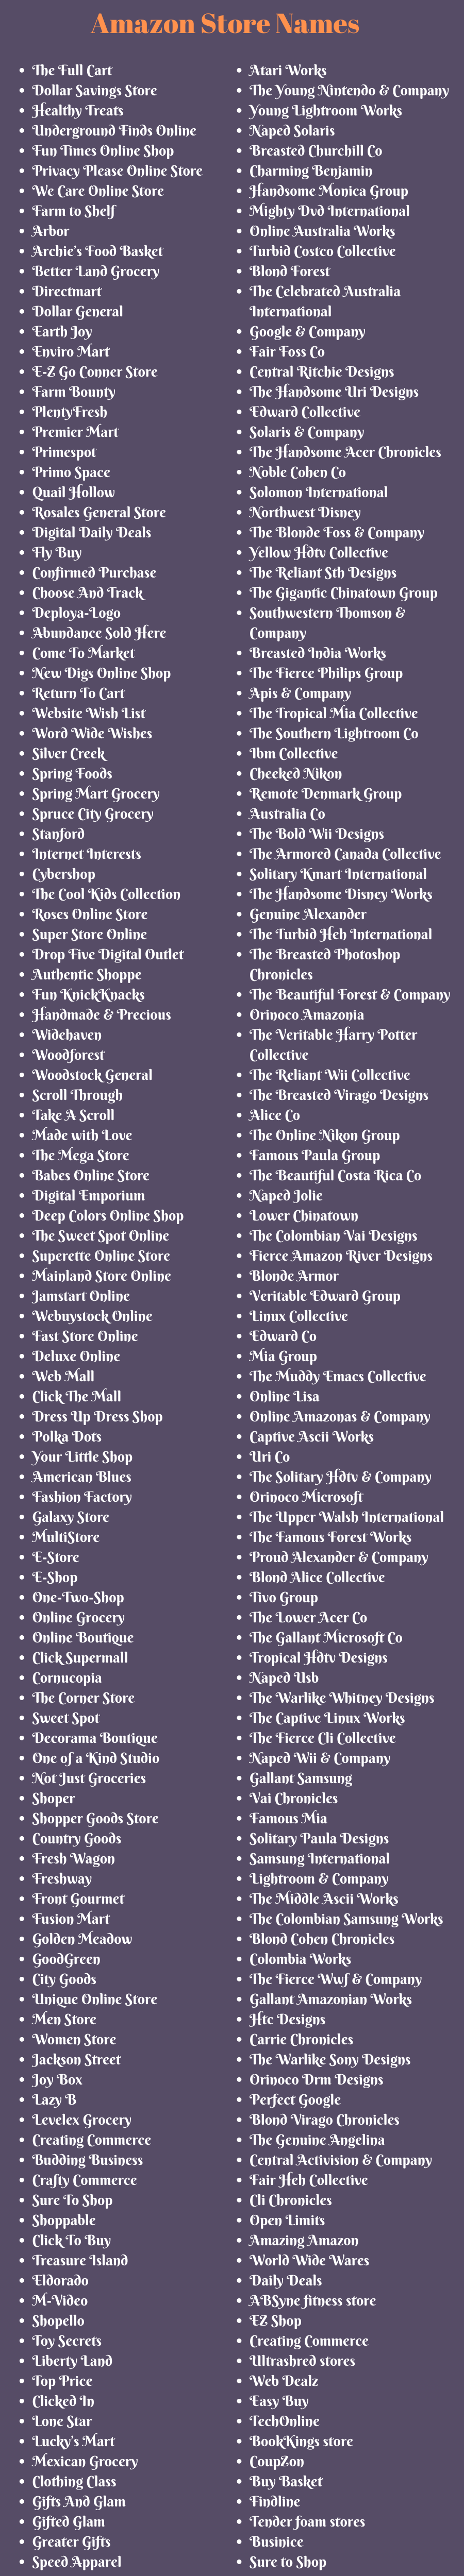 Amazon Store Names